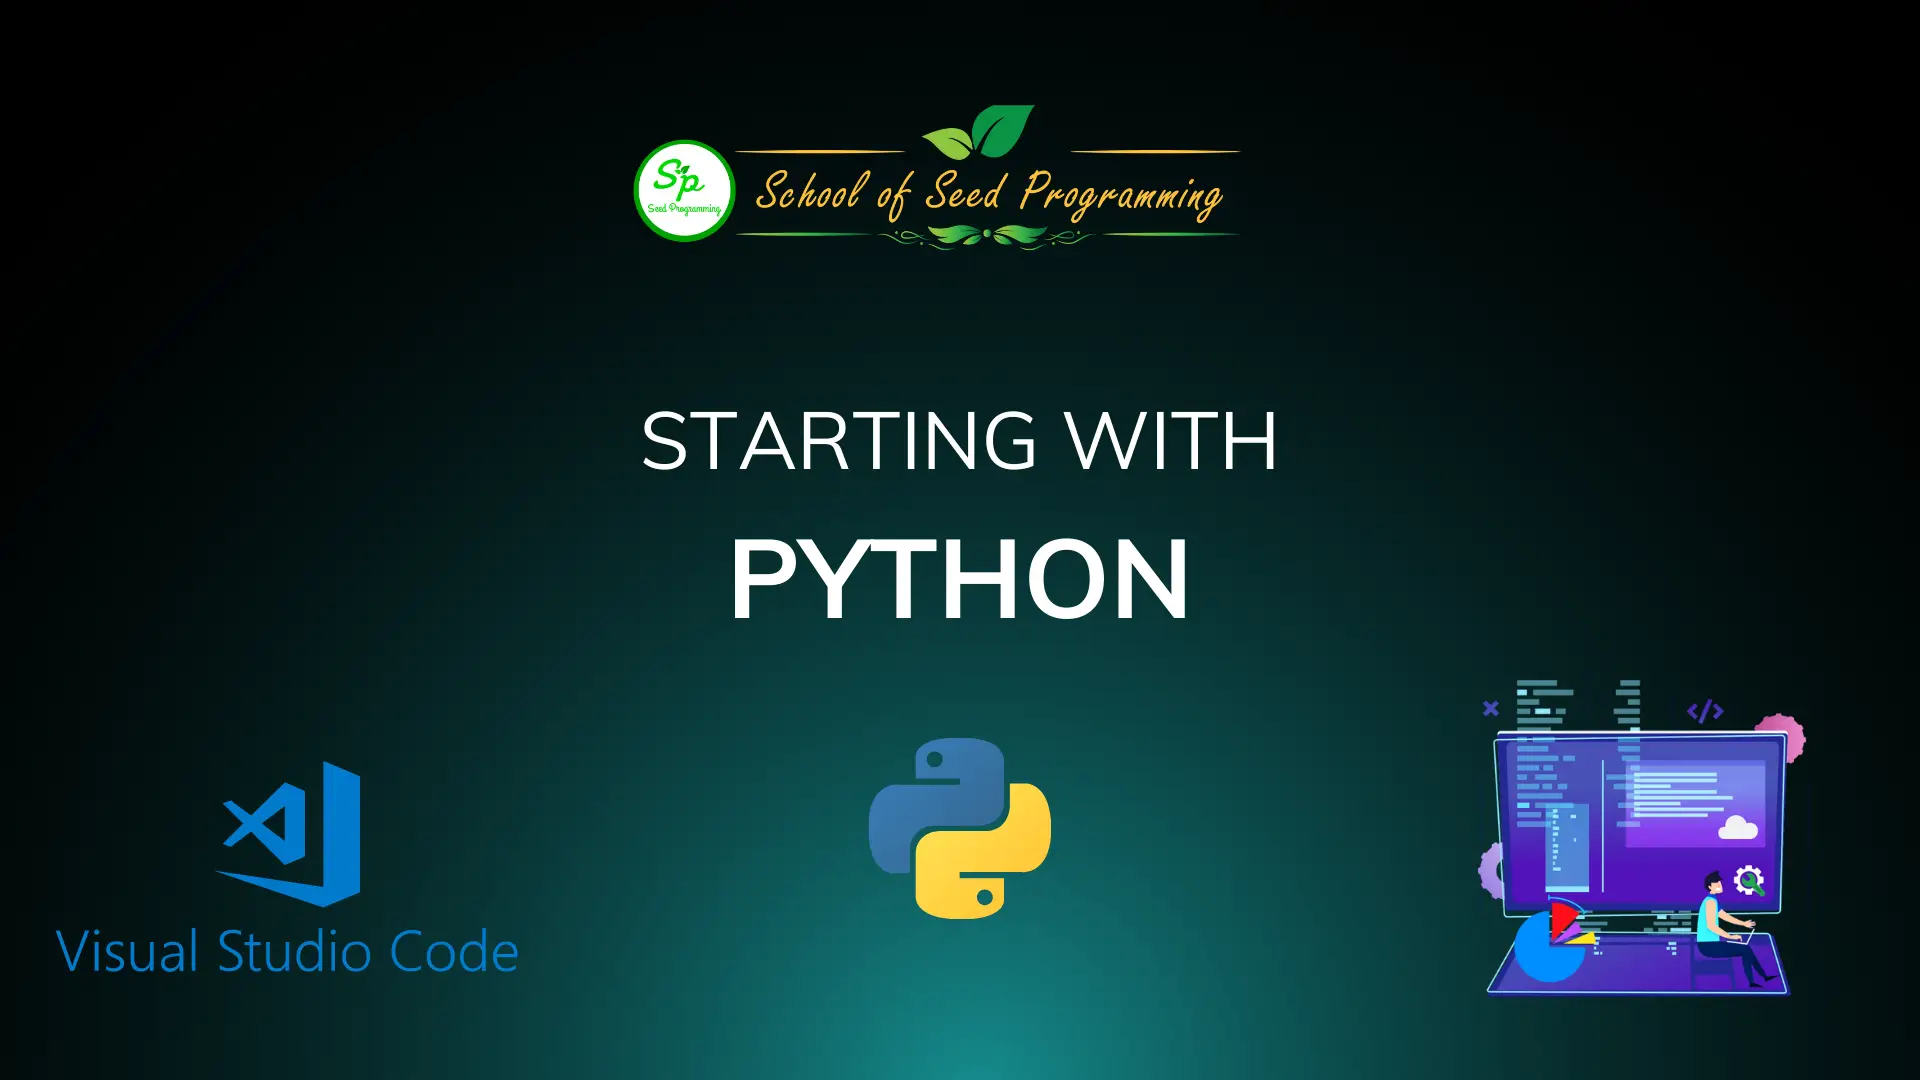 2. Starting with Python